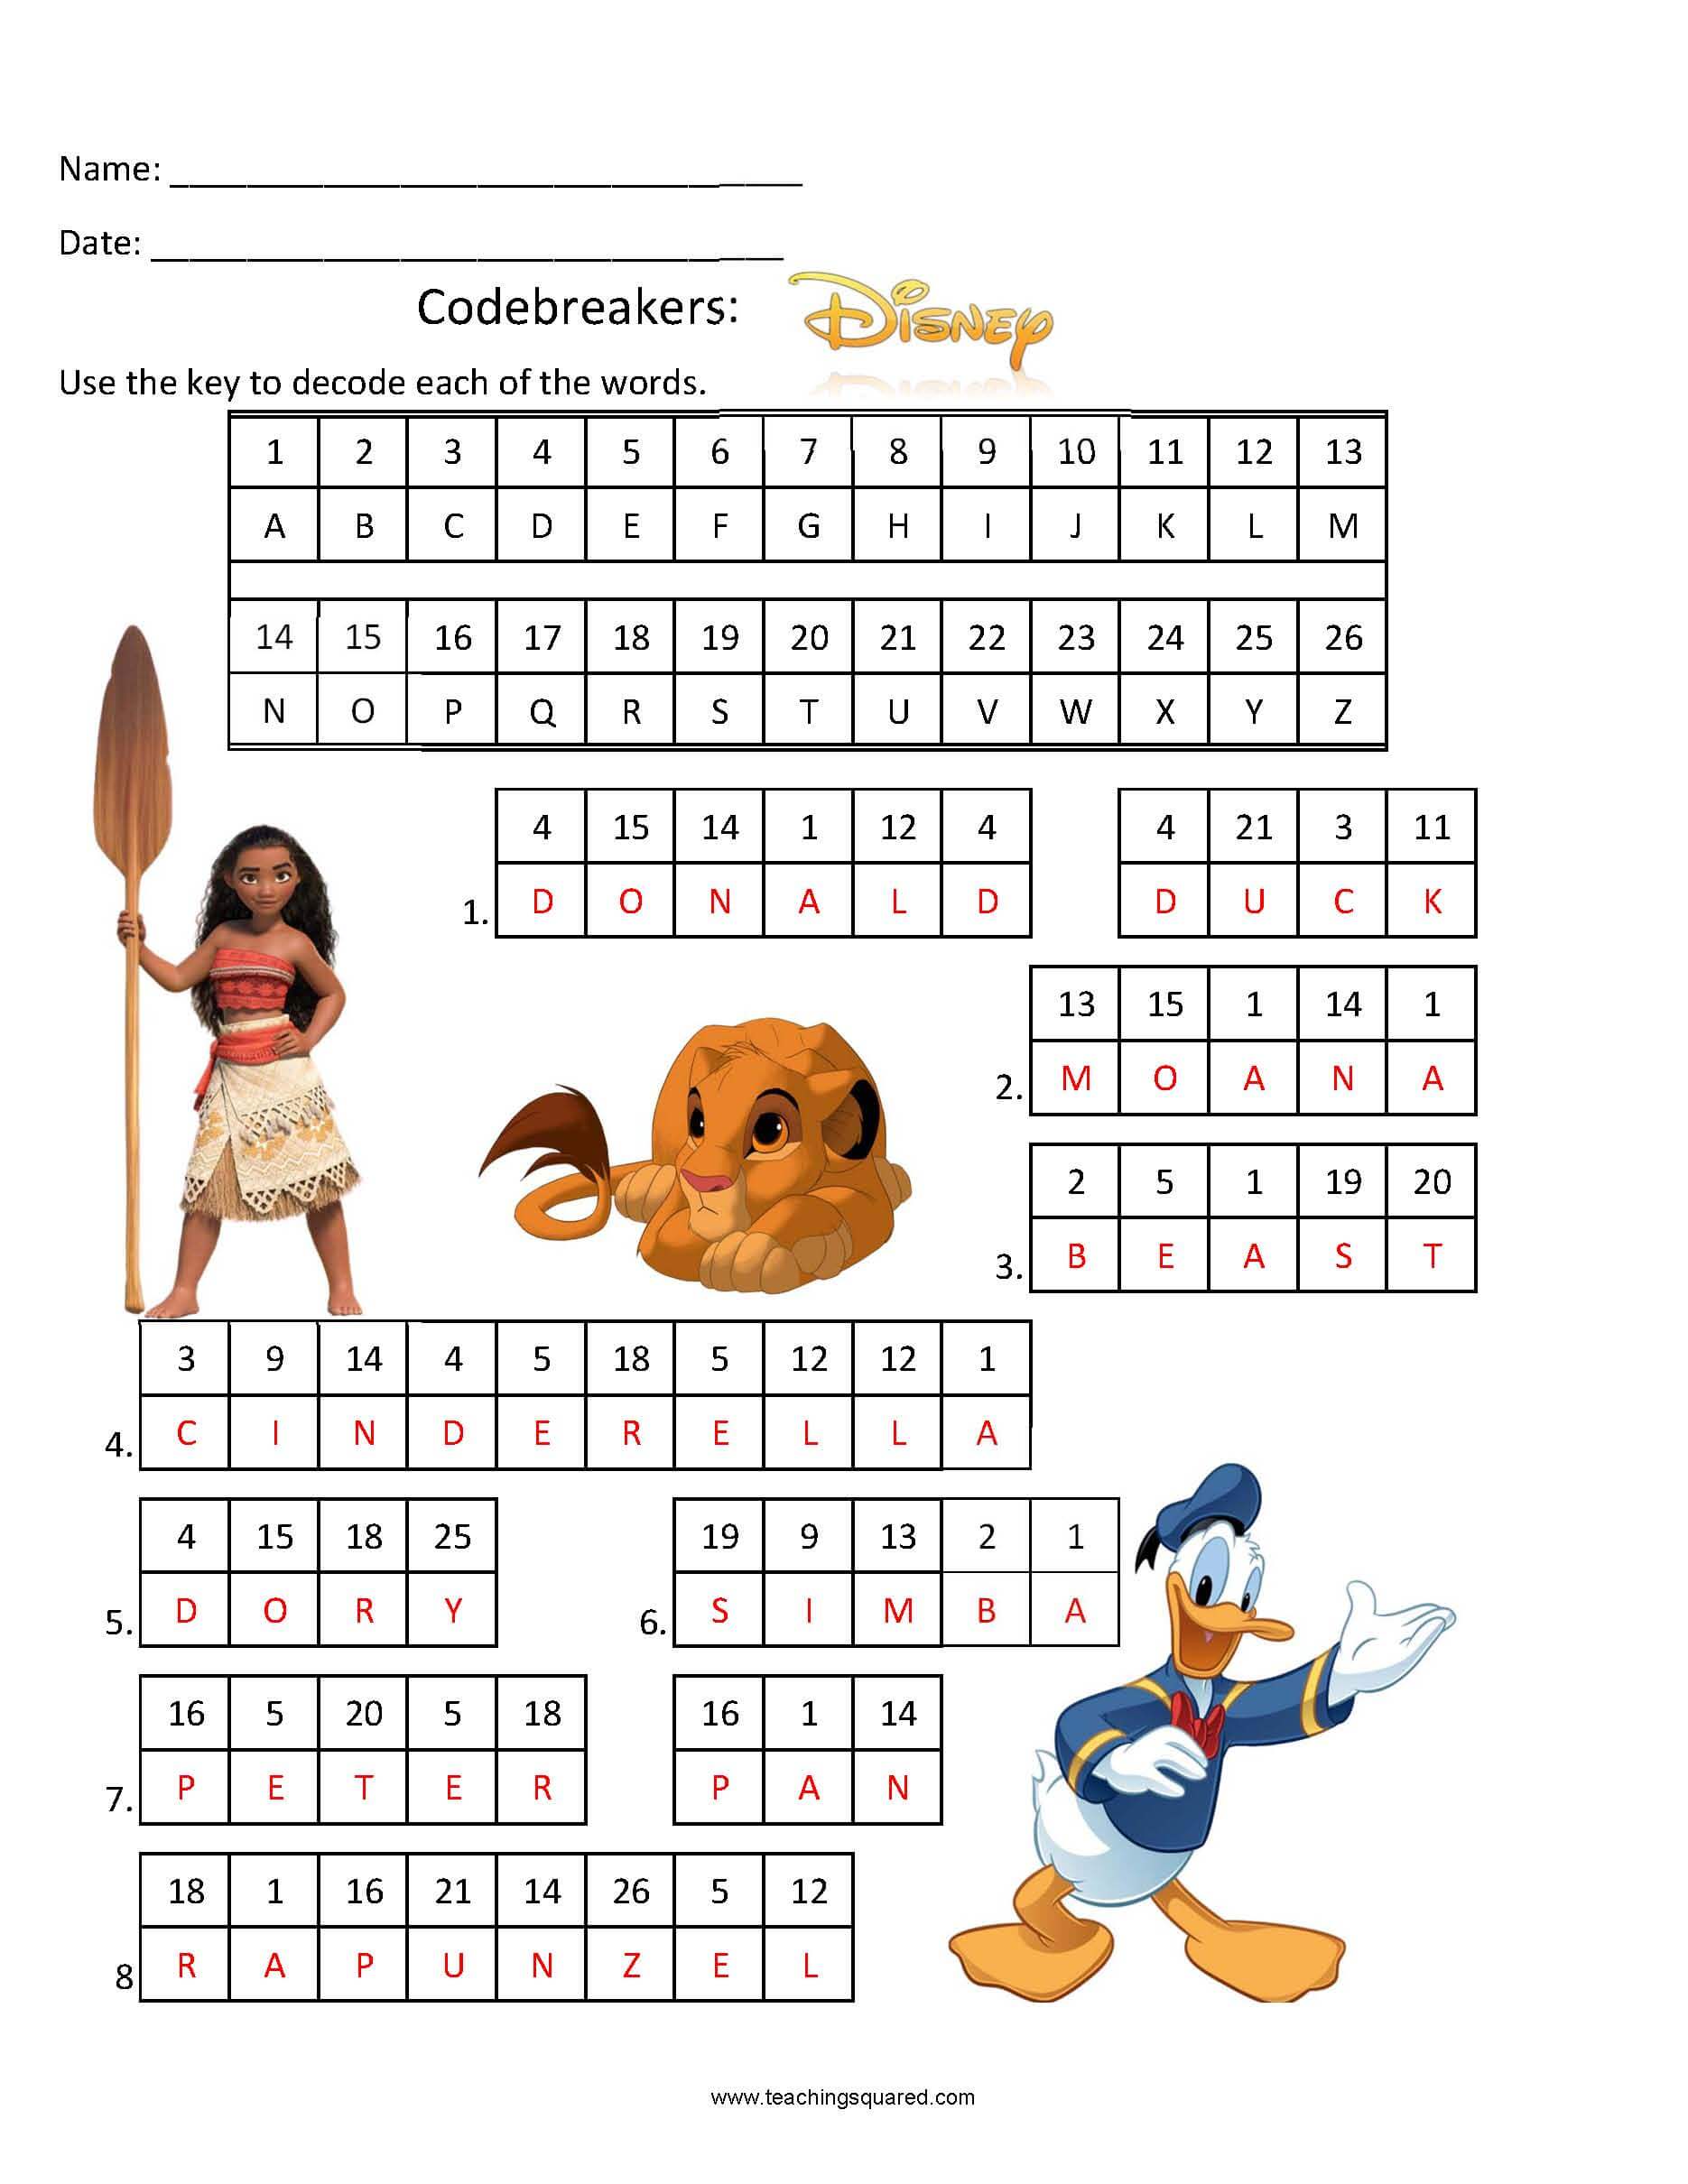 Codebreakers Disney Teaching Squared